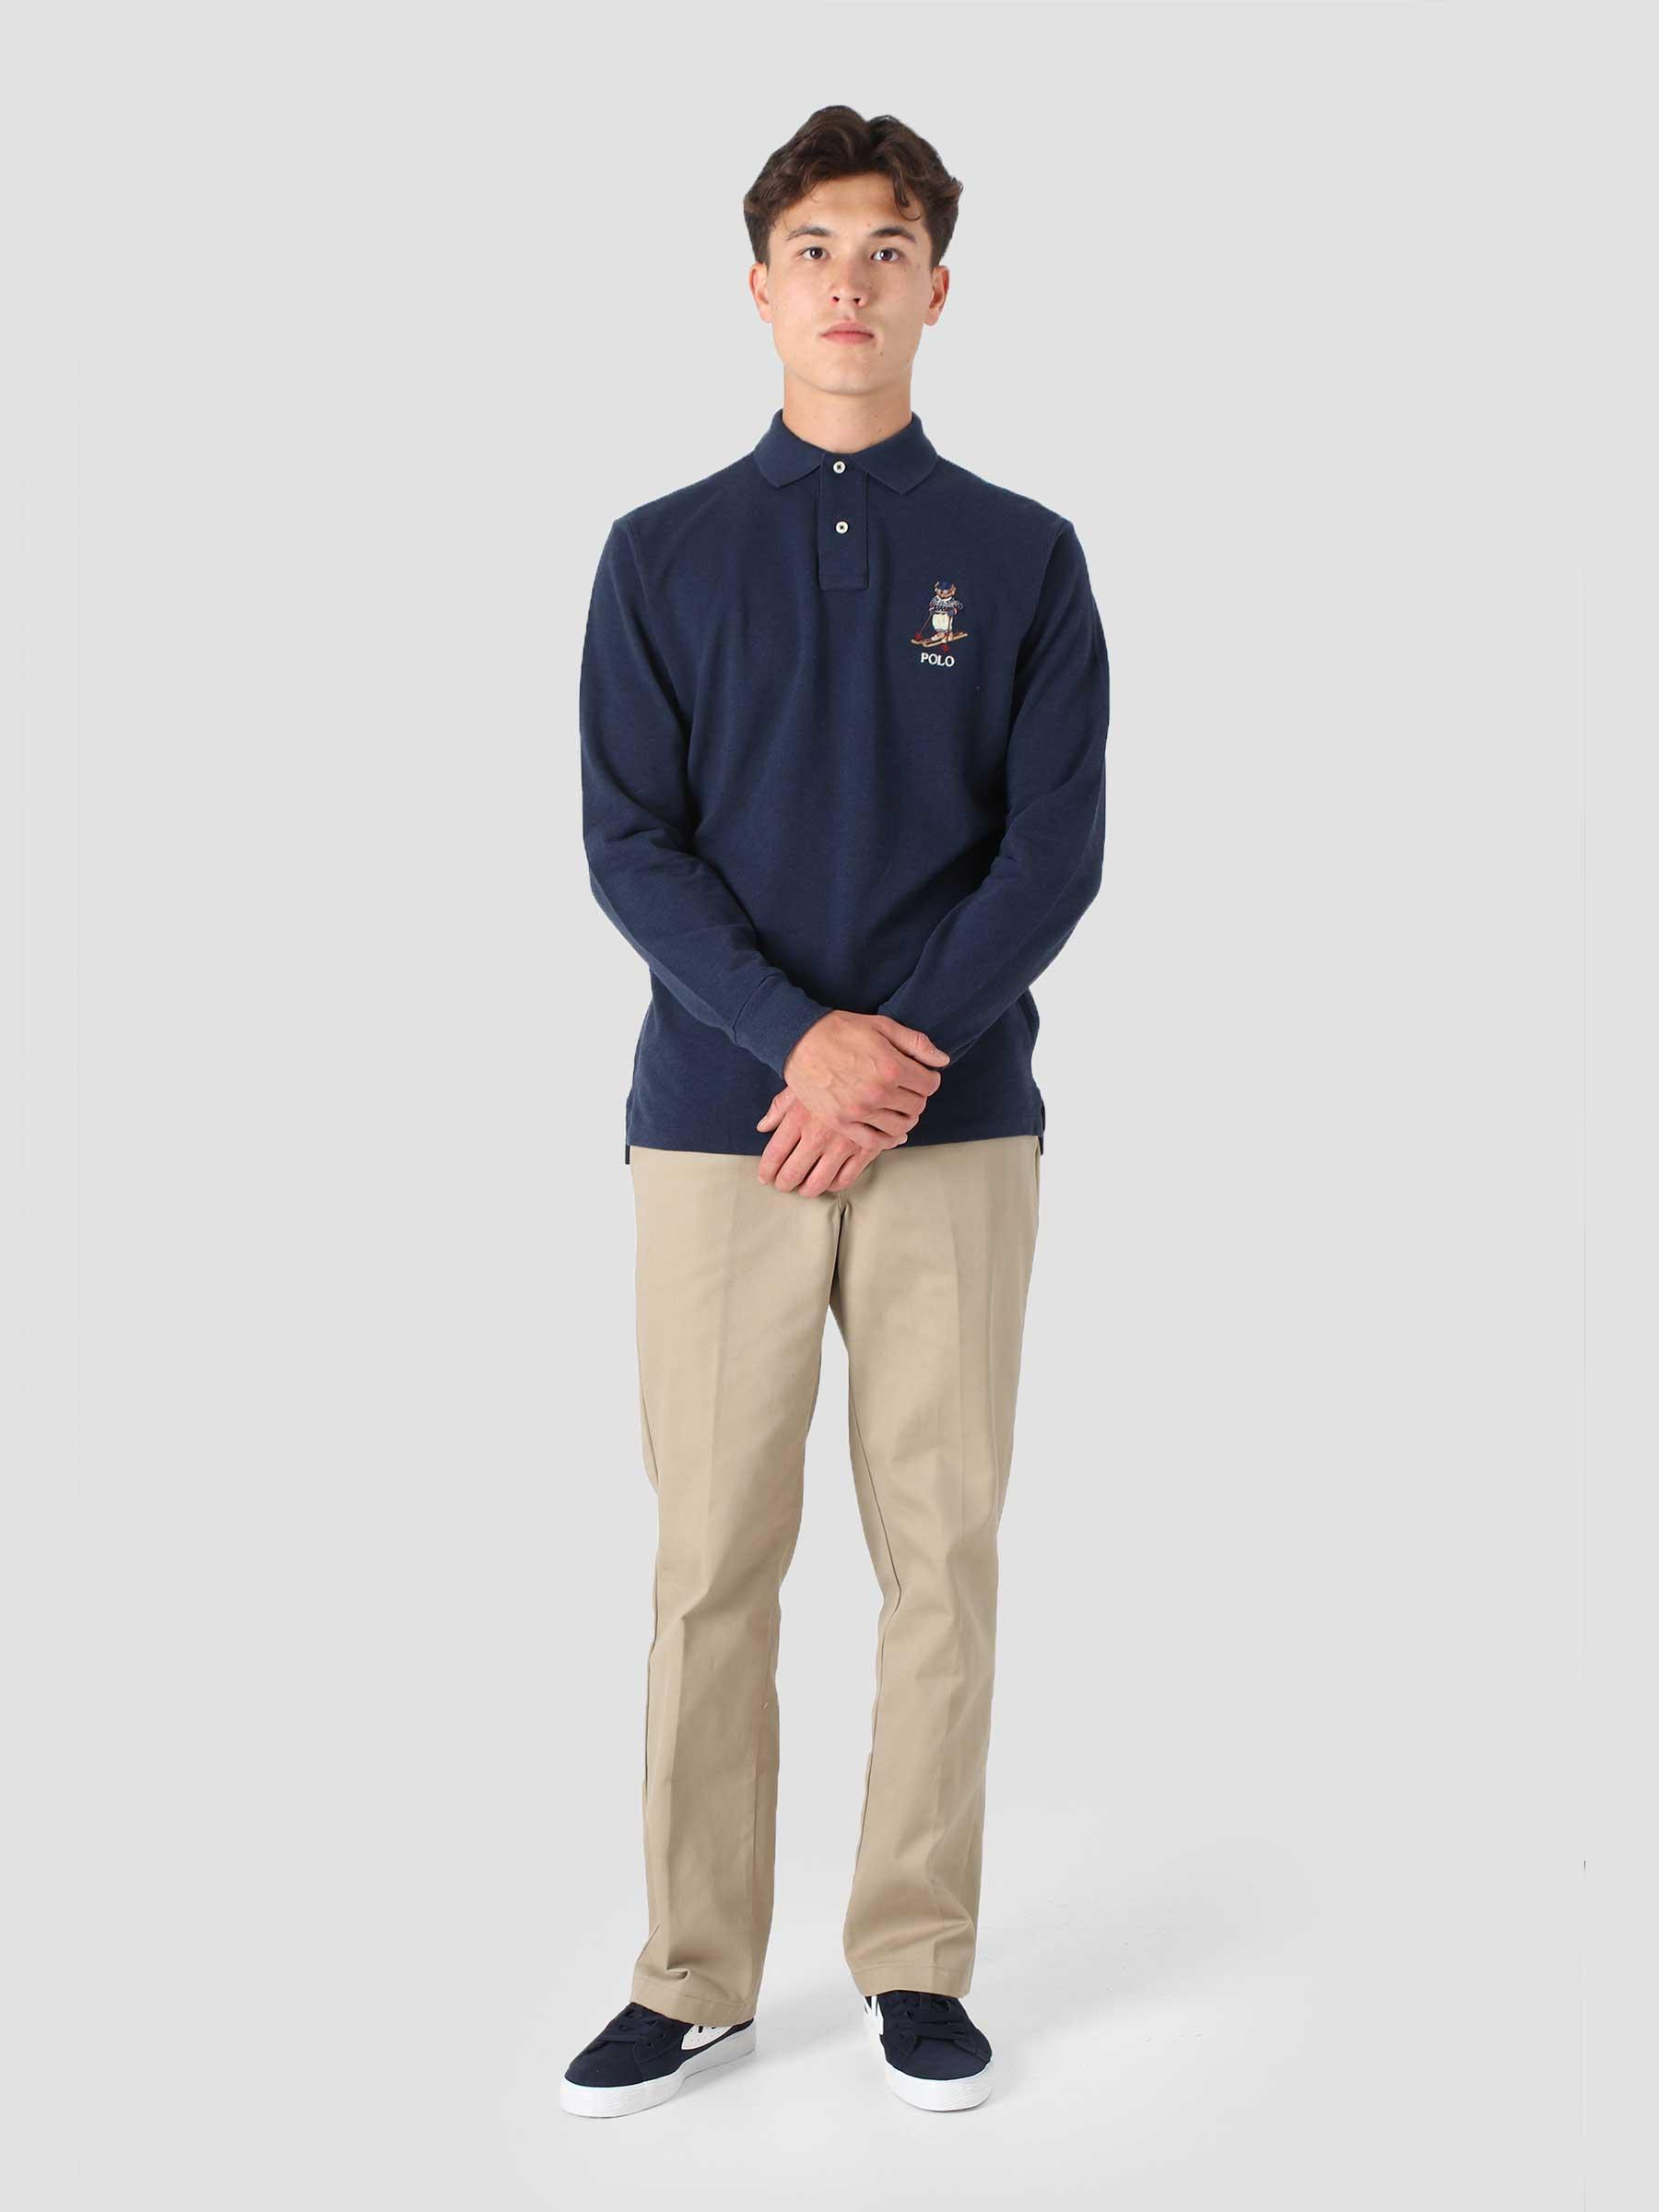 20-1 Mesh Long Sleeve Polo Shirt Medieval Blue Heather 710853322001